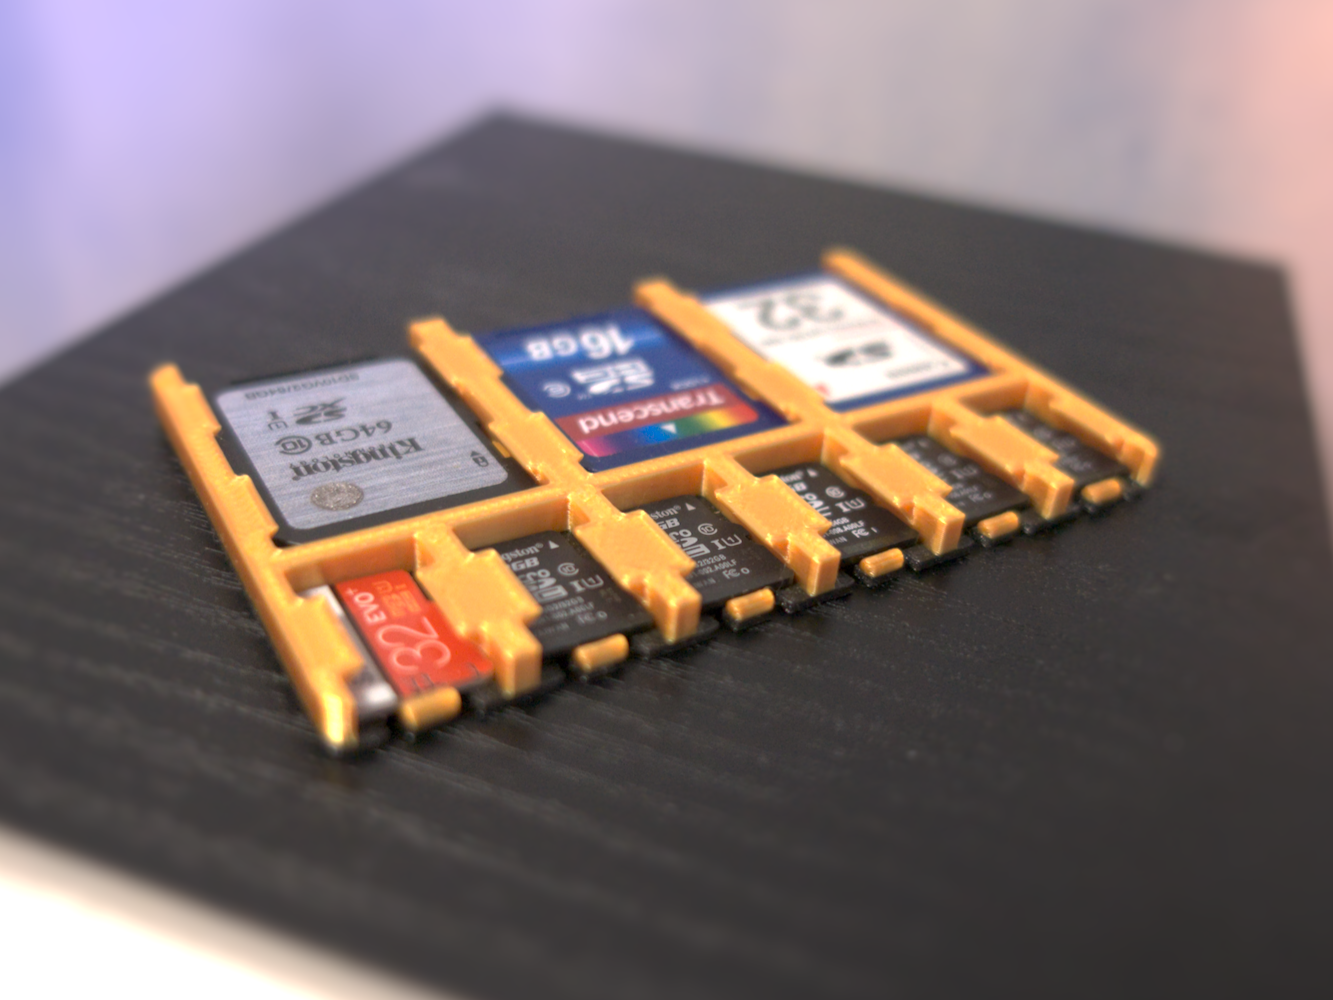 SD/microSD card holder